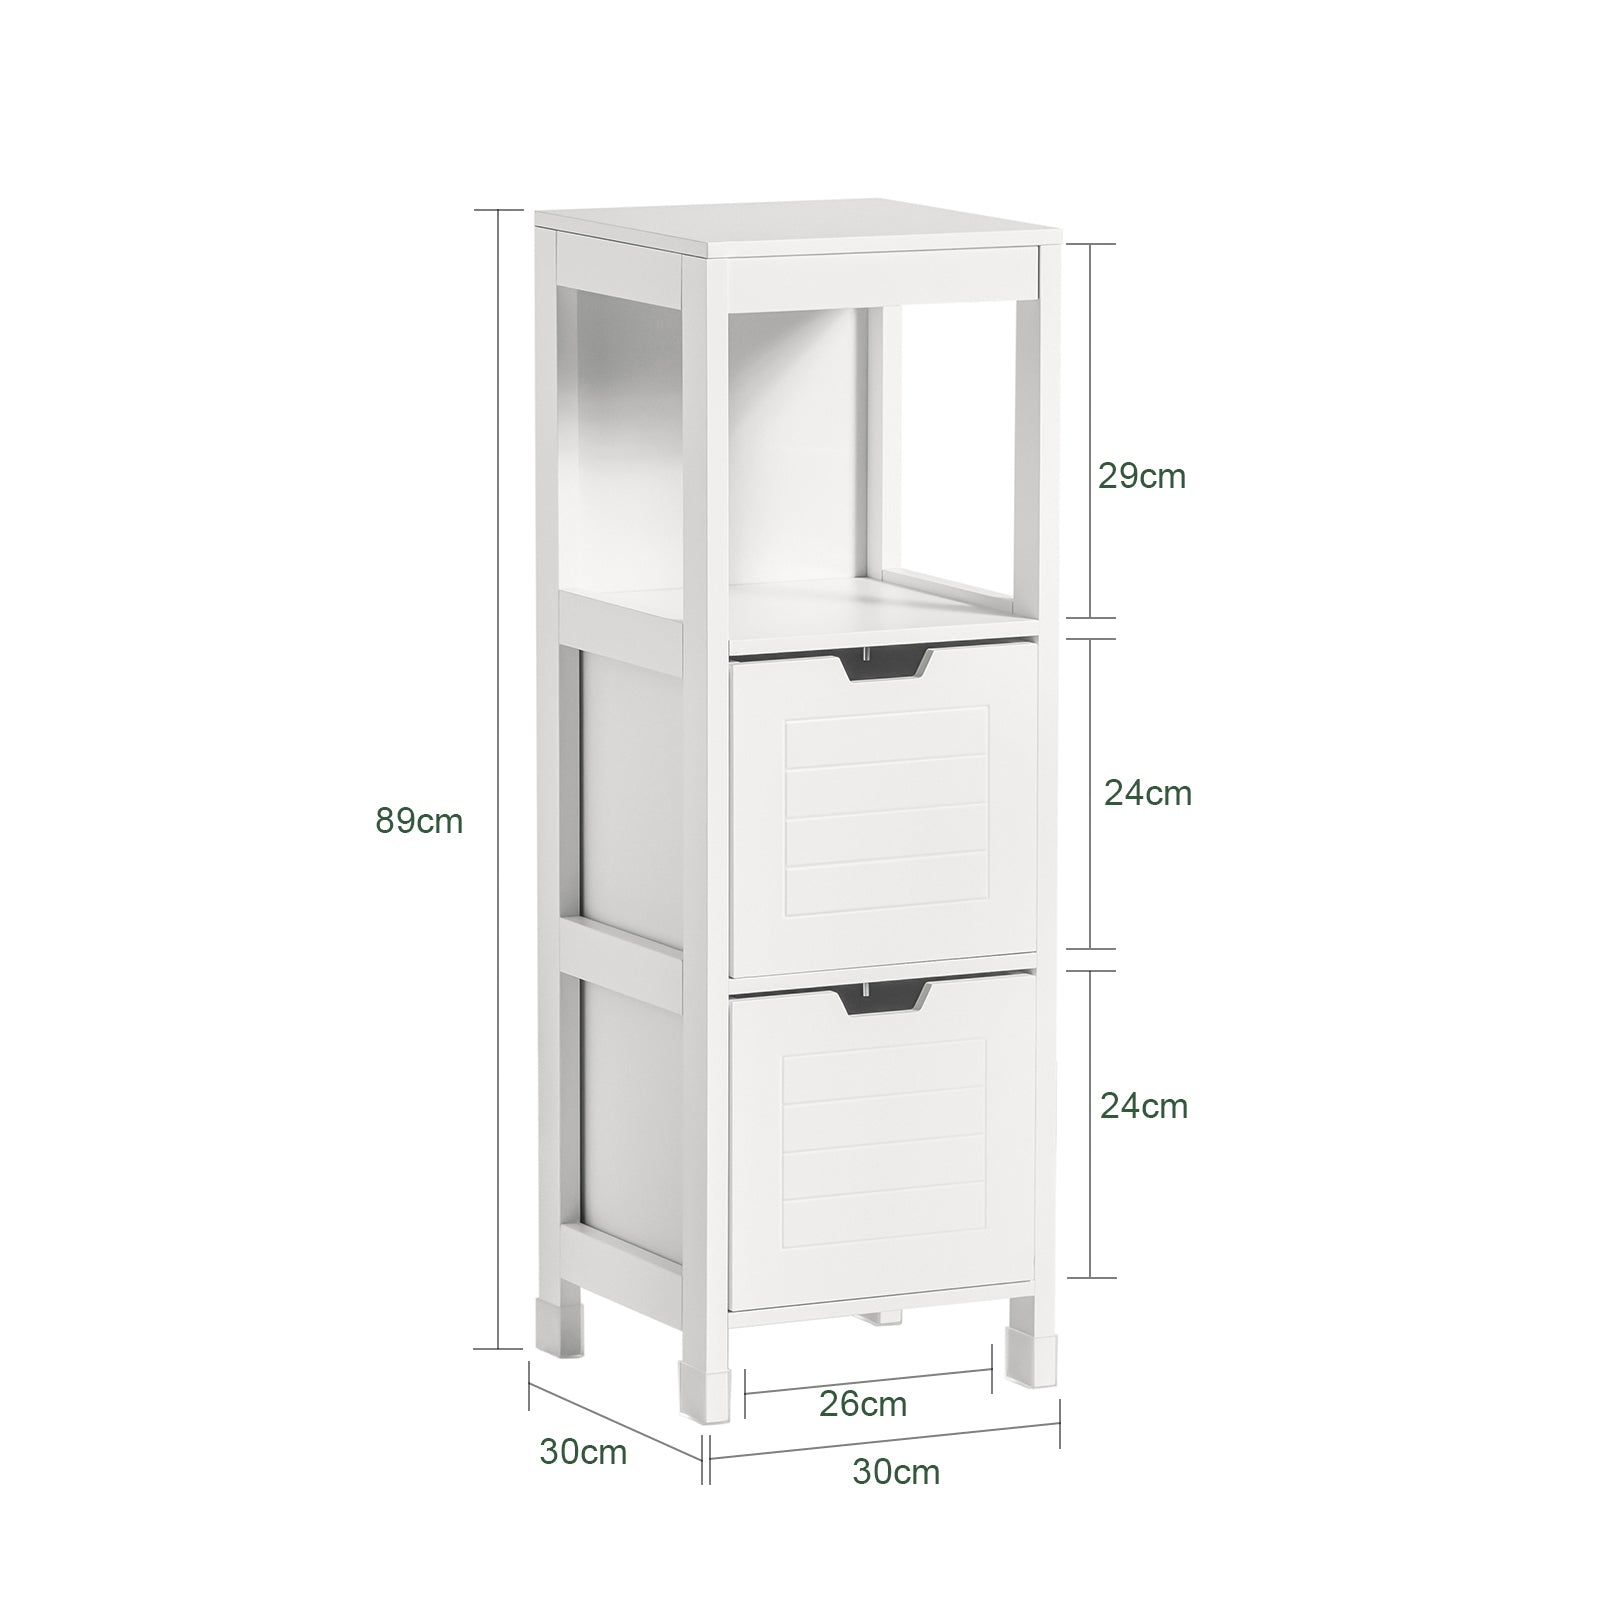 SoBuy Bathroom Storage Cabinet Unit with 1 Shelf and 2 Drawers FRG127-W